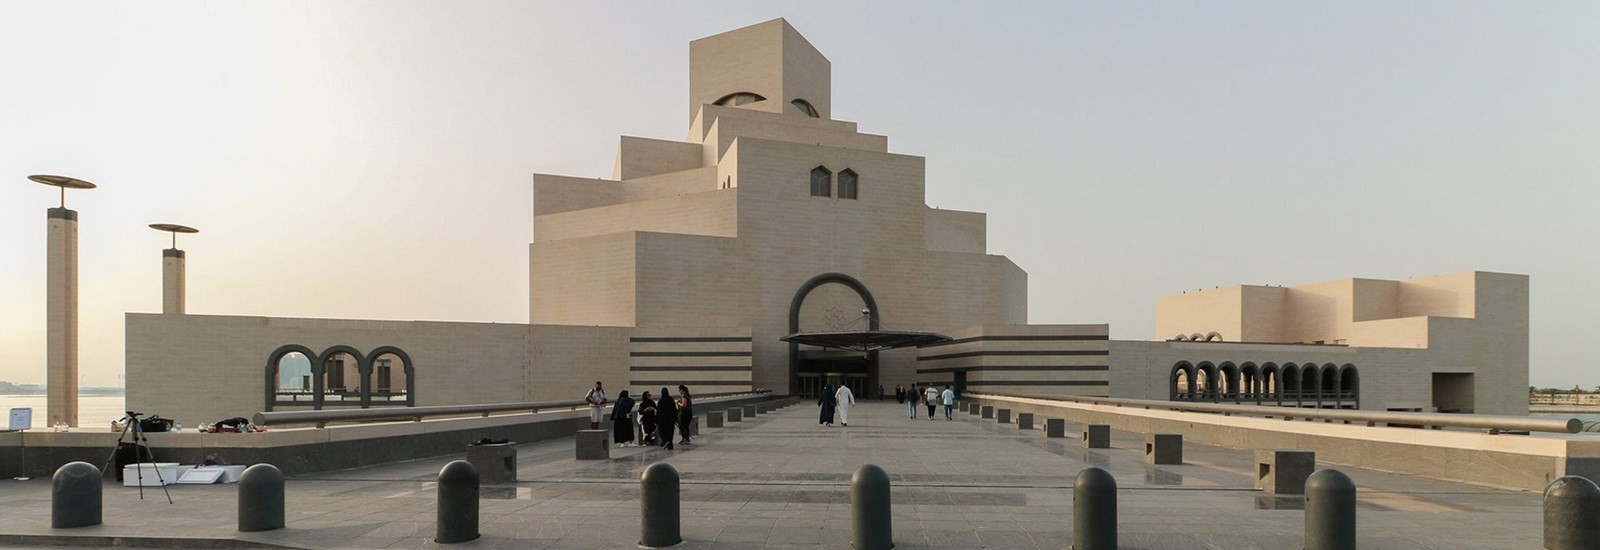 MUSEUM OF ISLAMIC ART, DOHA, QATAR - Sheet1